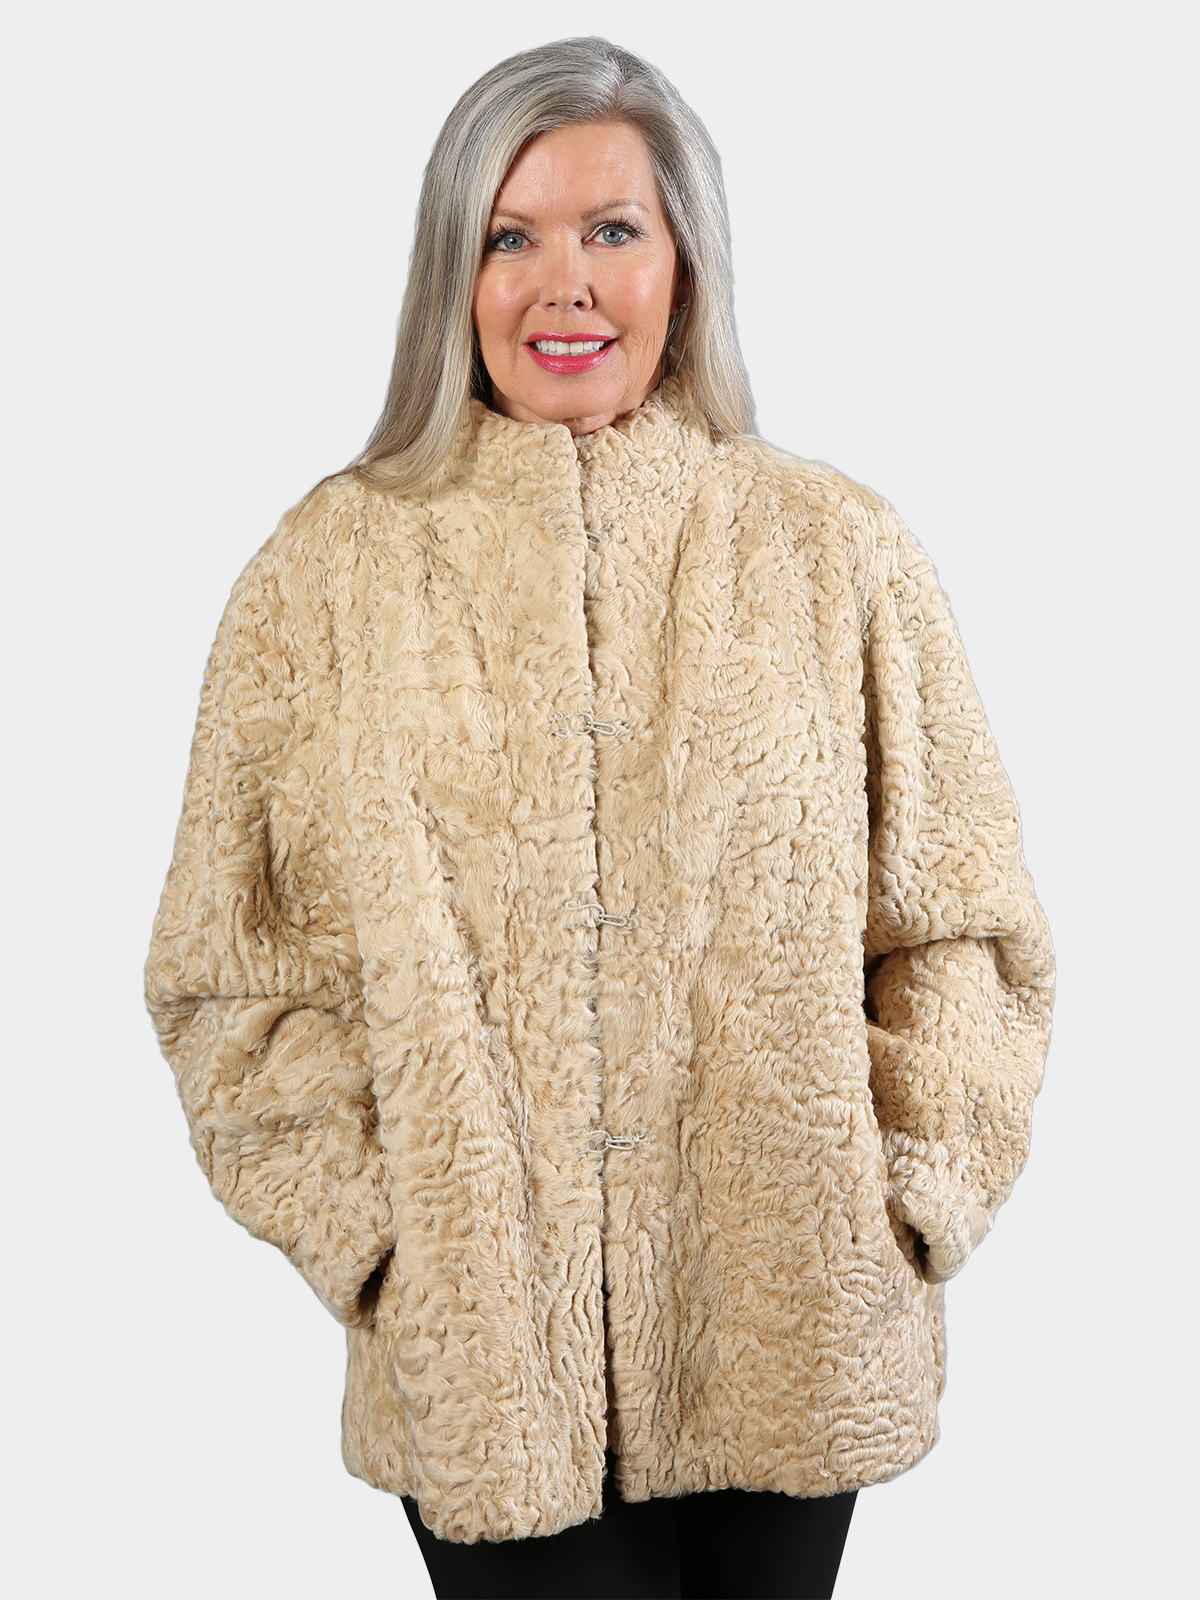 Woman's Tan Persian Lamb Fur Jacket Reversible to Leather